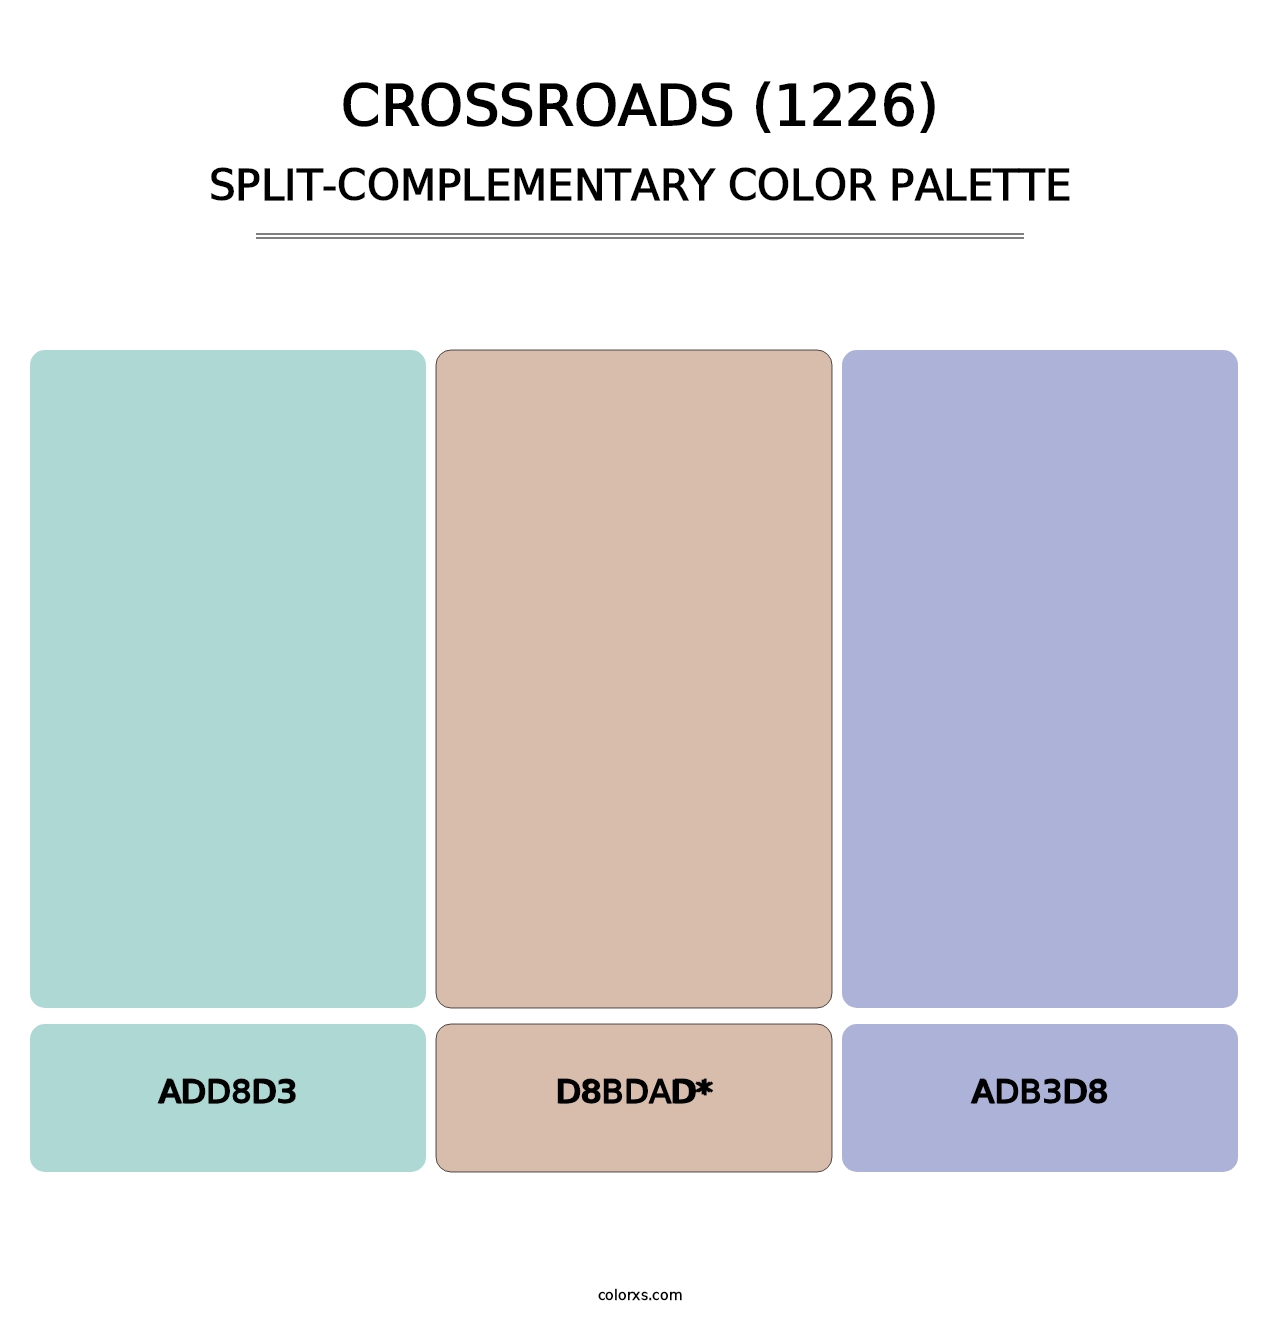 Crossroads (1226) - Split-Complementary Color Palette